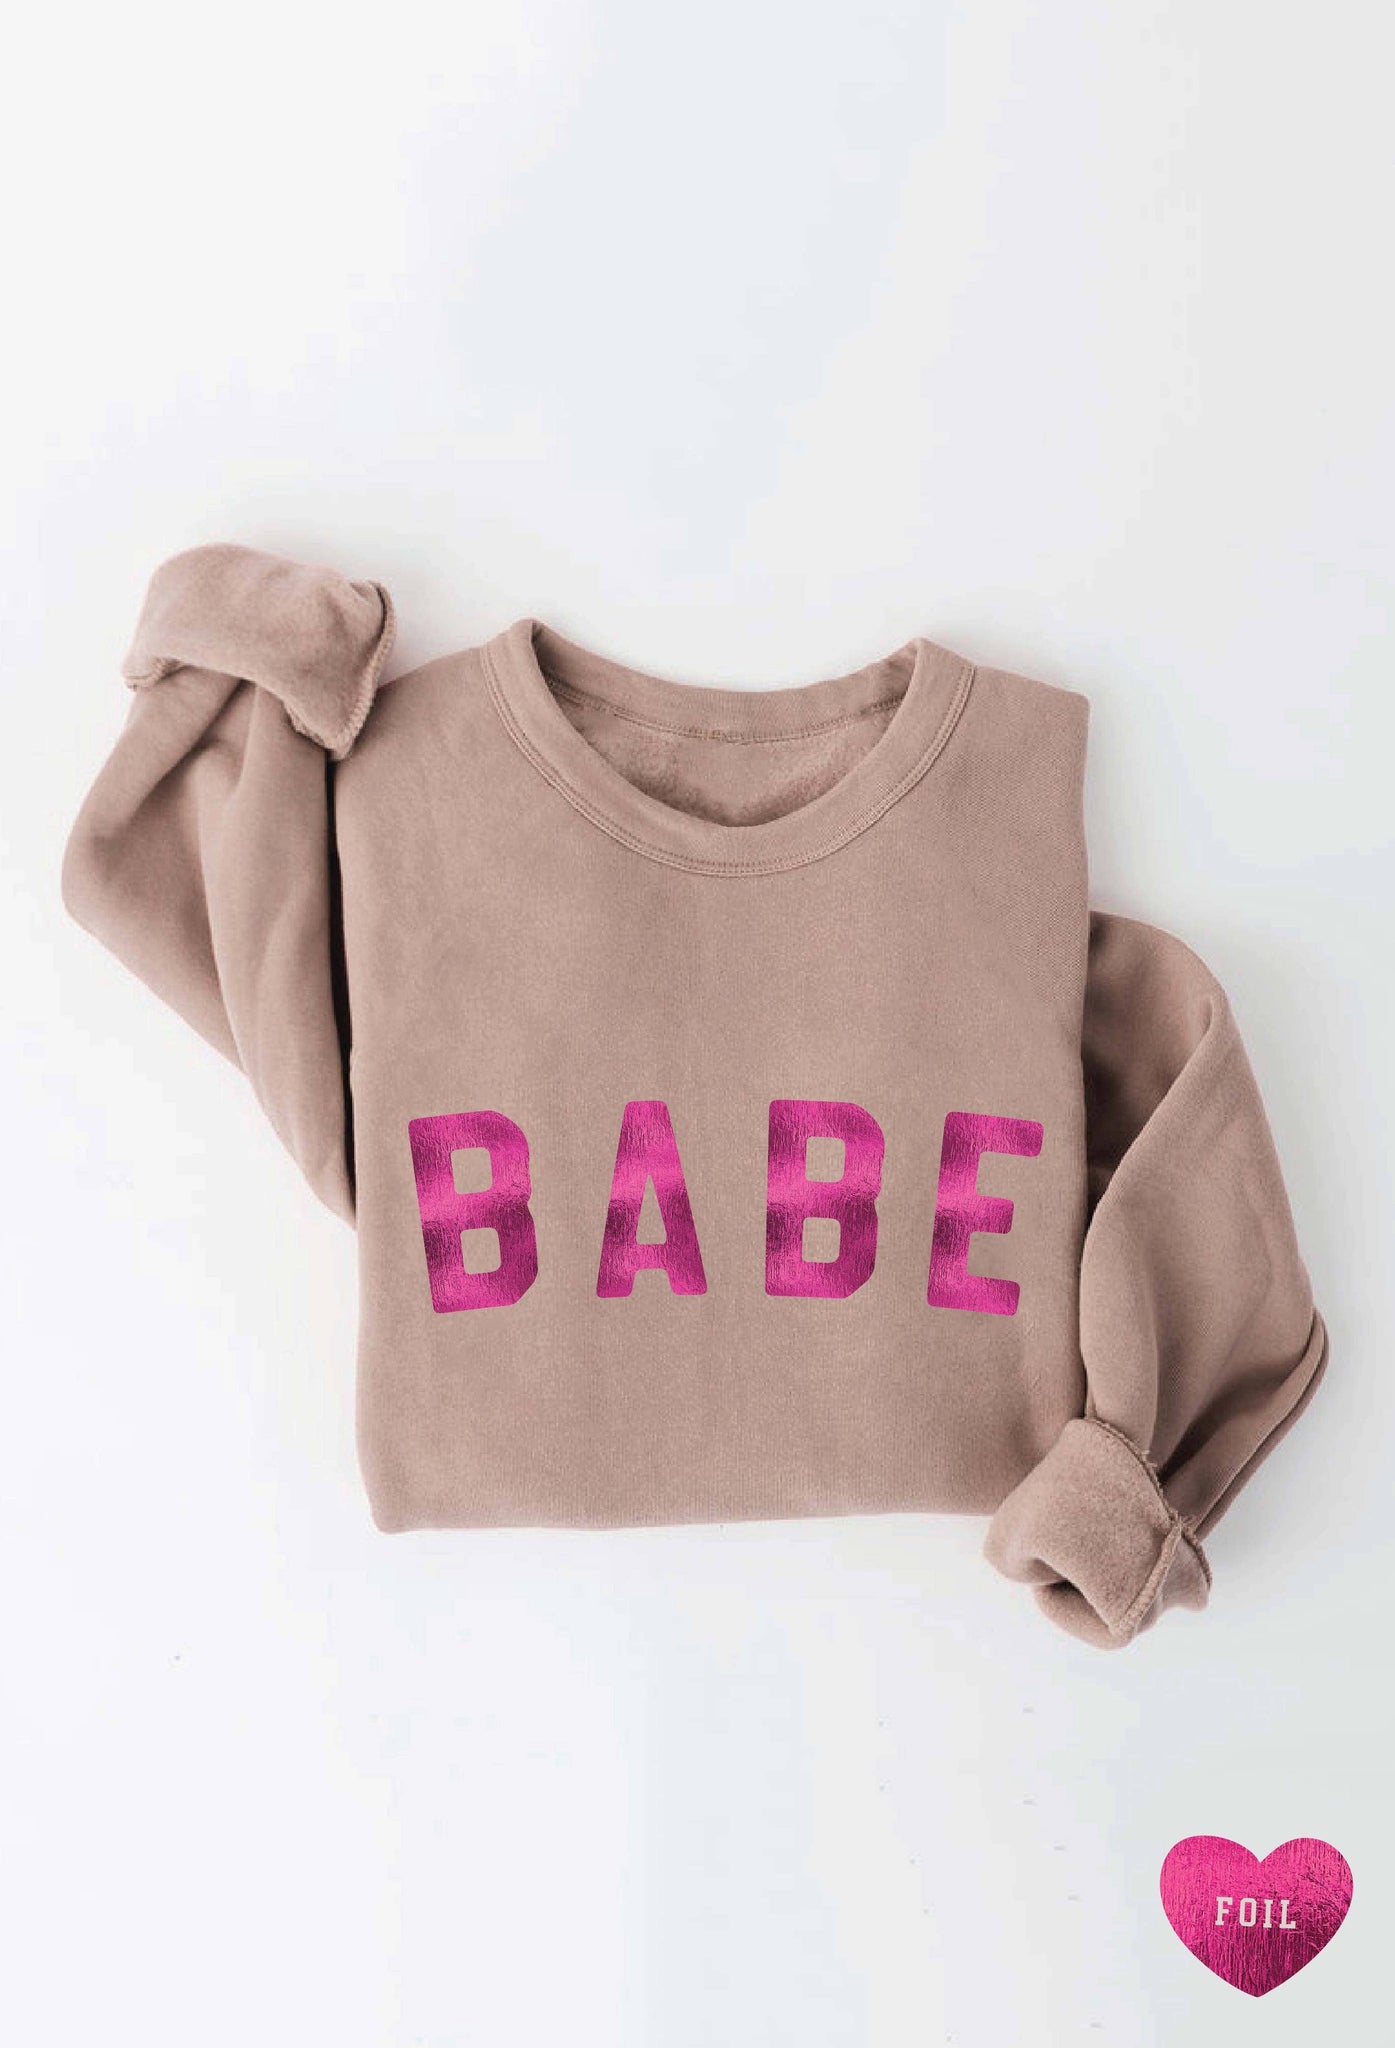 BABE FOIL TAN Graphic  Sweatshirt